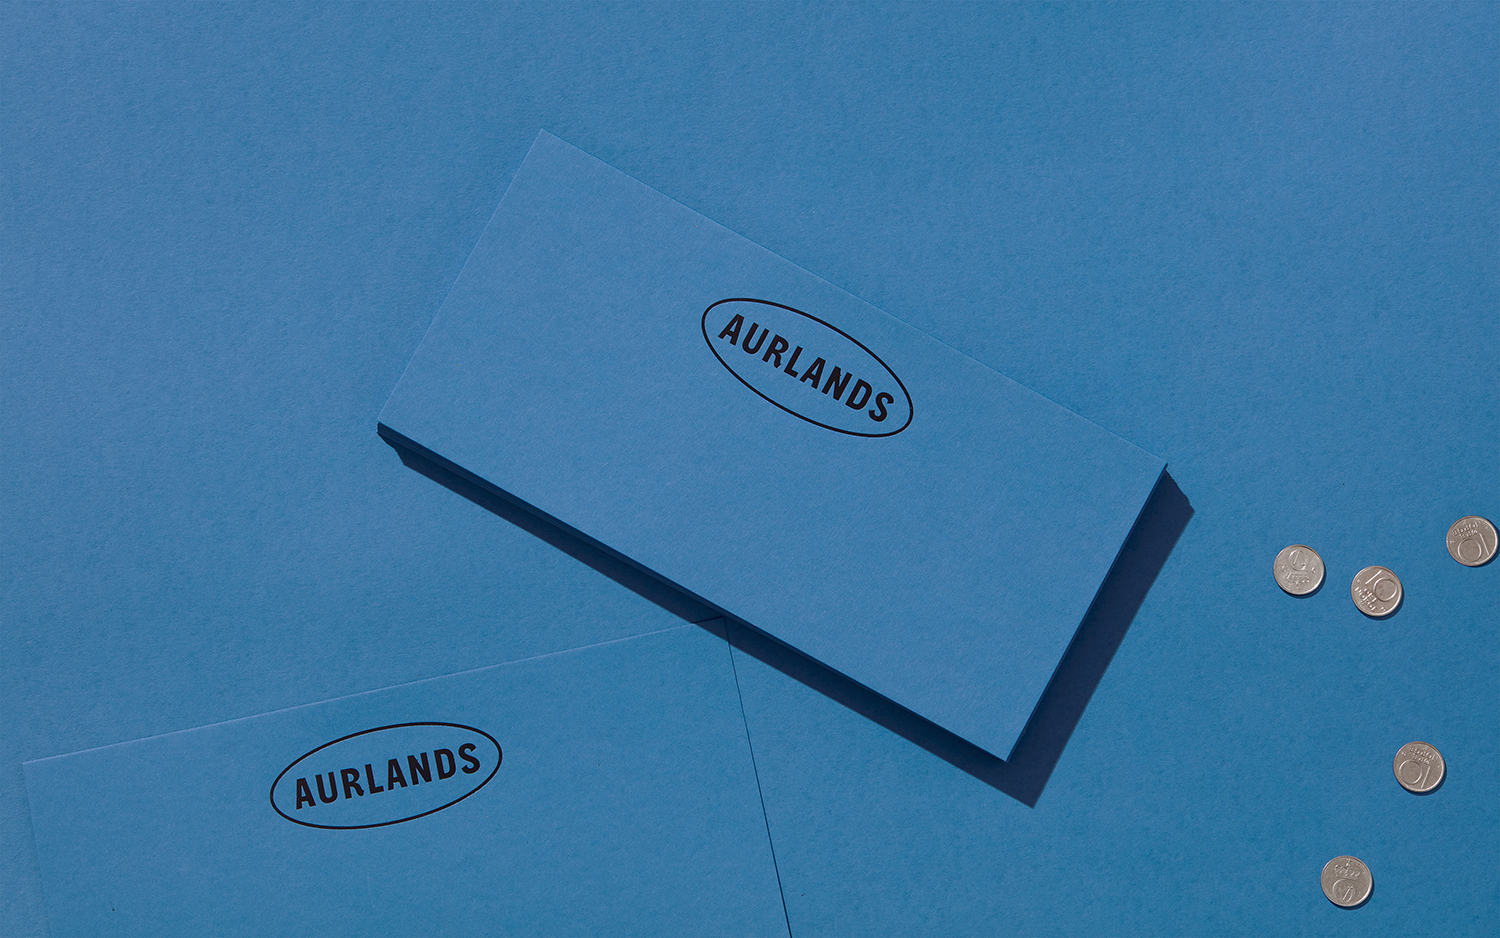 Logo, branding, packaging and website designed by Heydays for Norwegian shoemaker Aurlands